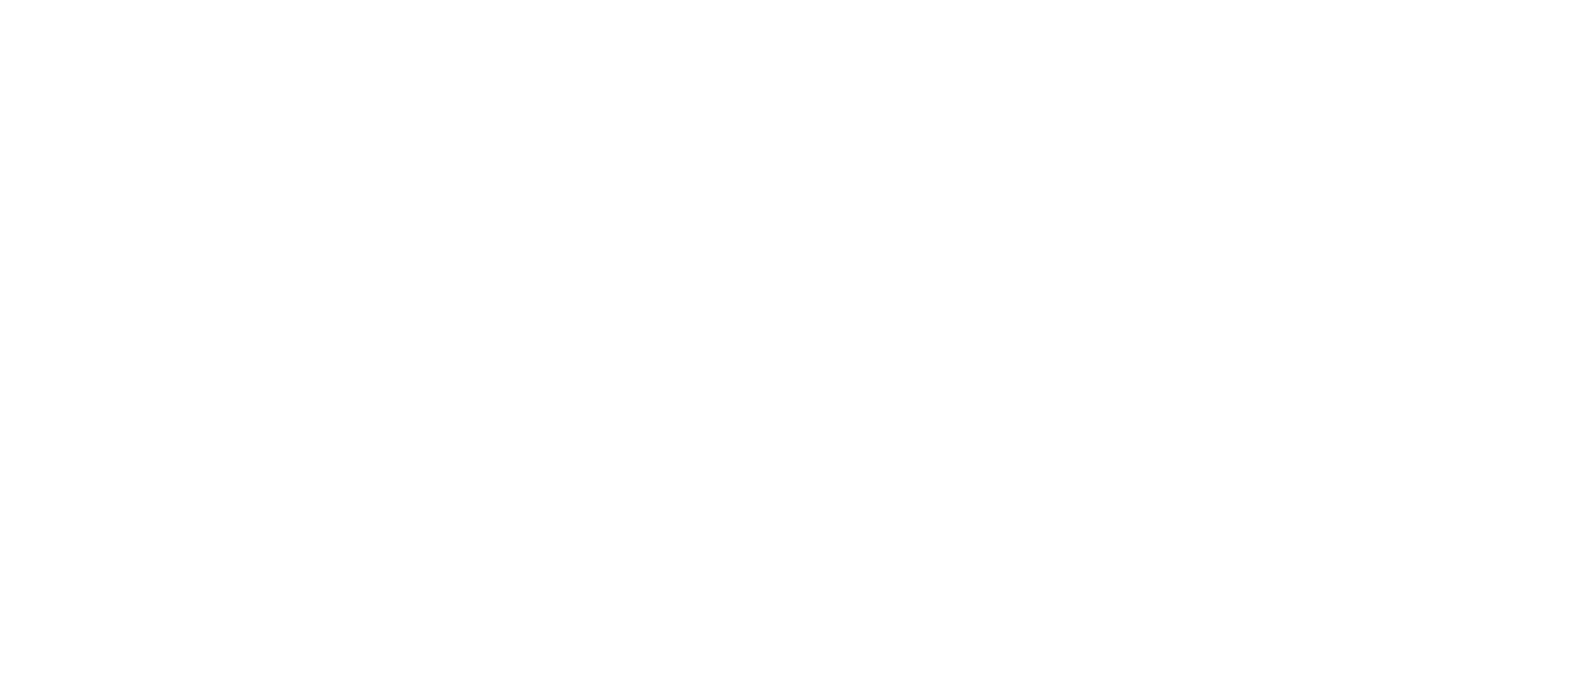 Pennon Group logo large for dark backgrounds (transparent PNG)